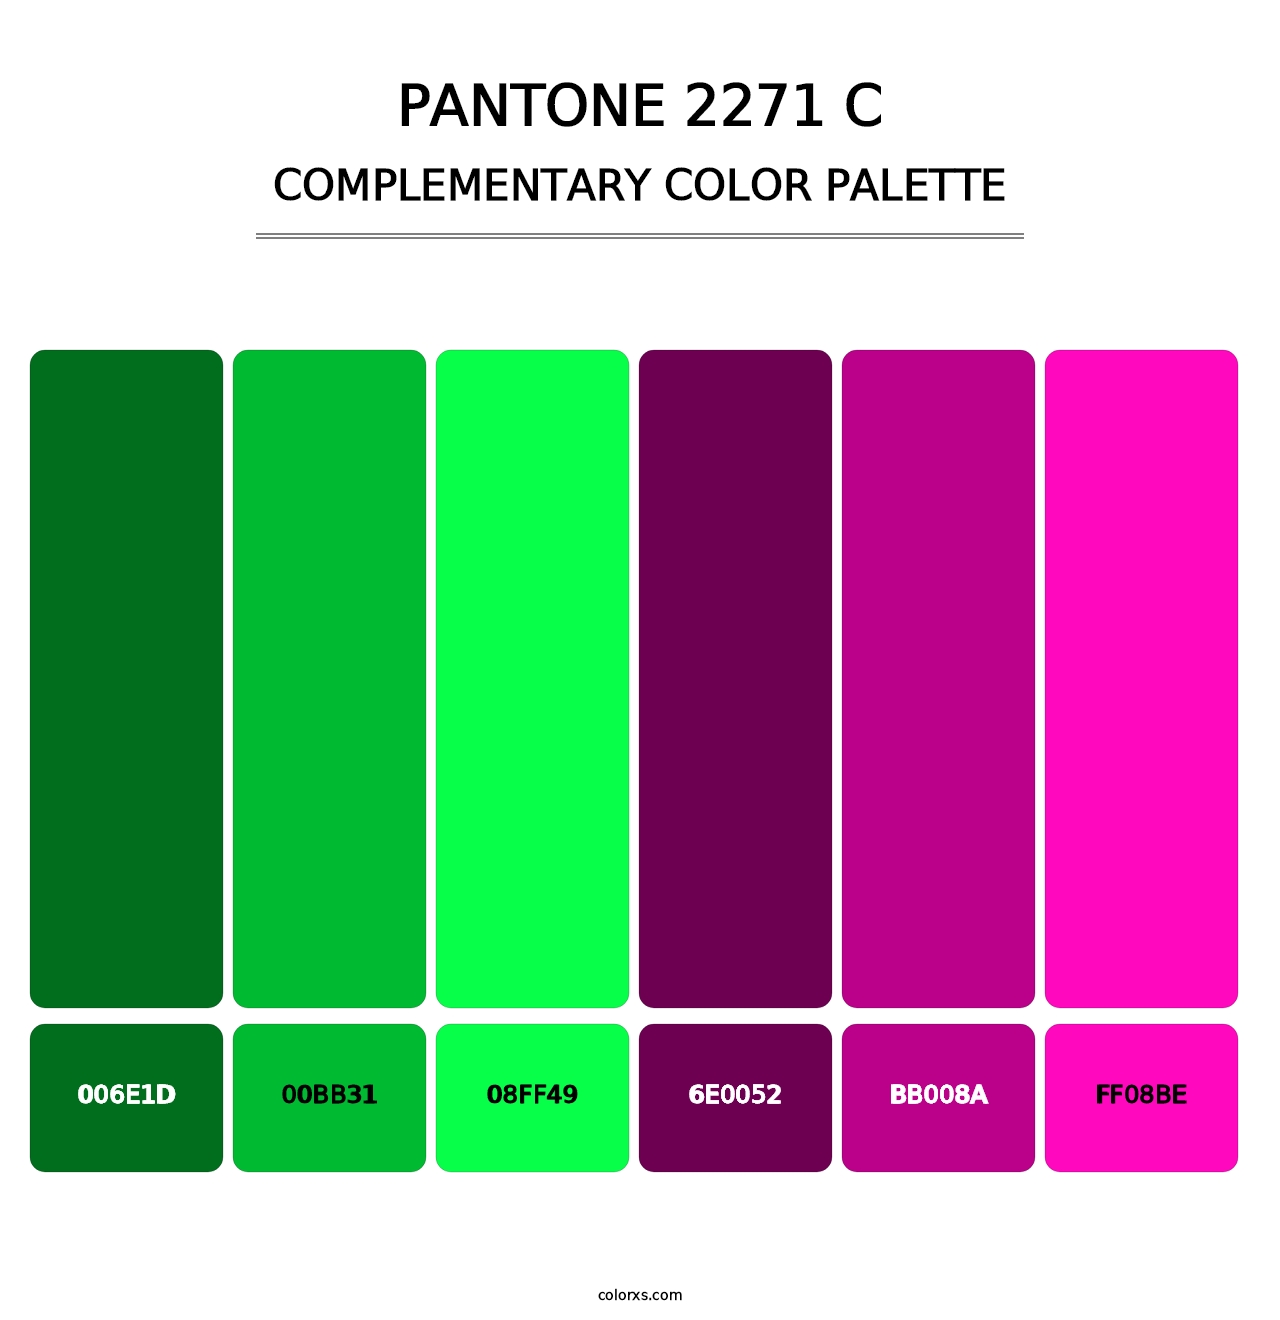 PANTONE 2271 C - Complementary Color Palette